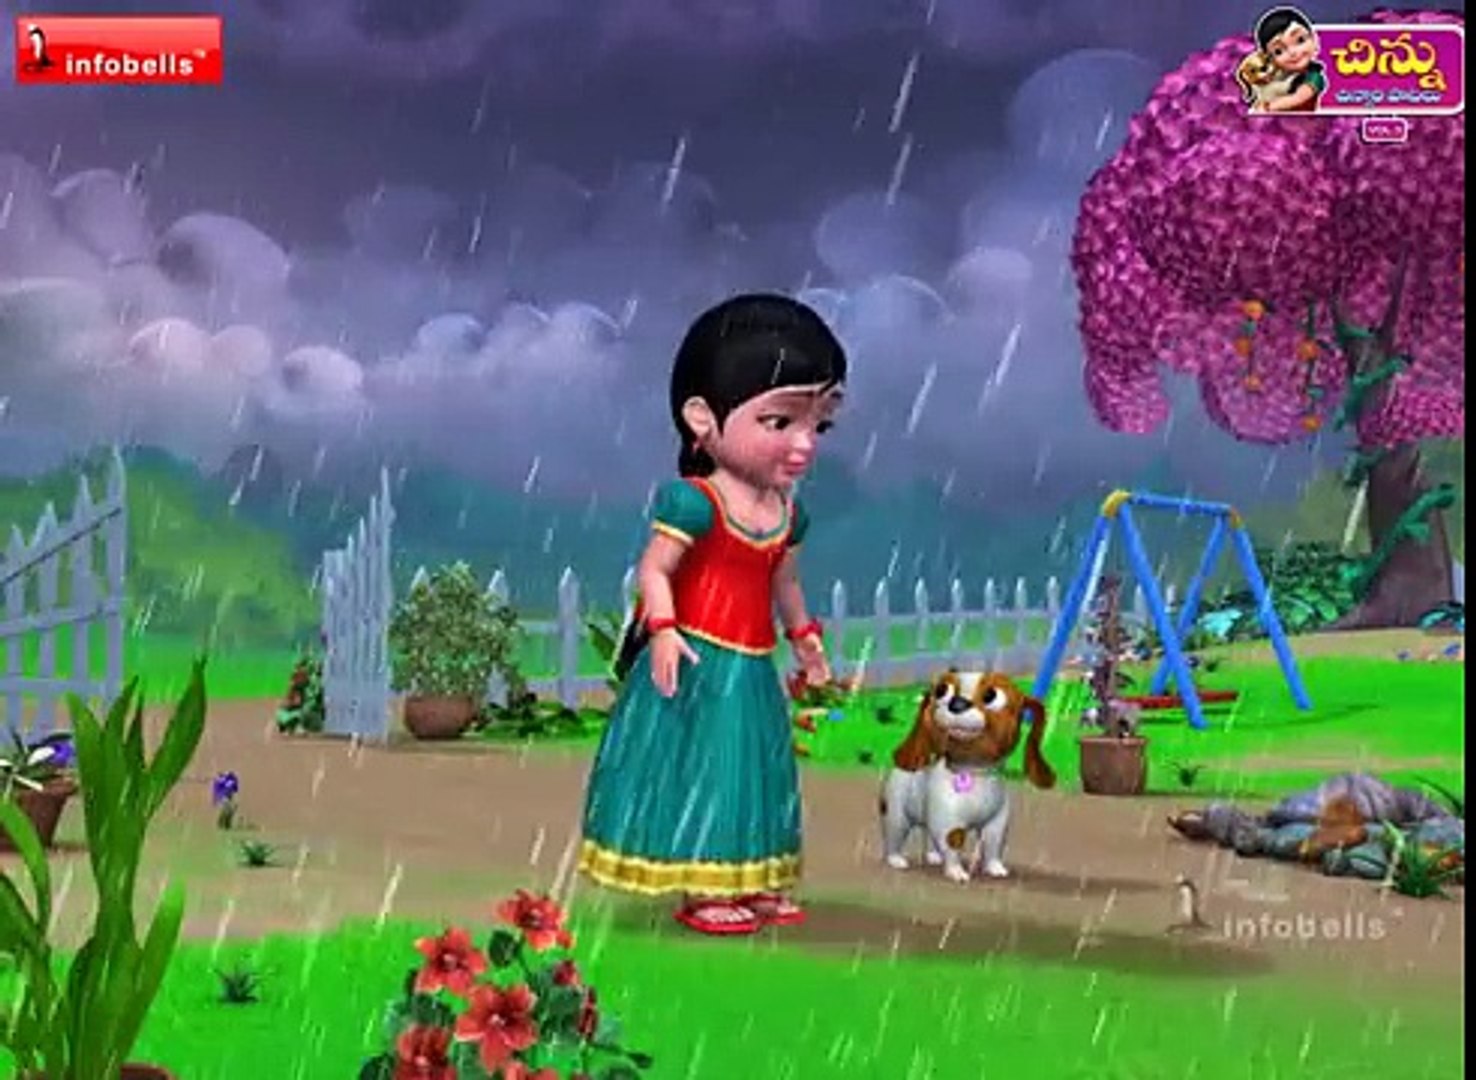 The Rain Song   Chinnu Telugu Rhymes for Children   Infobells ...